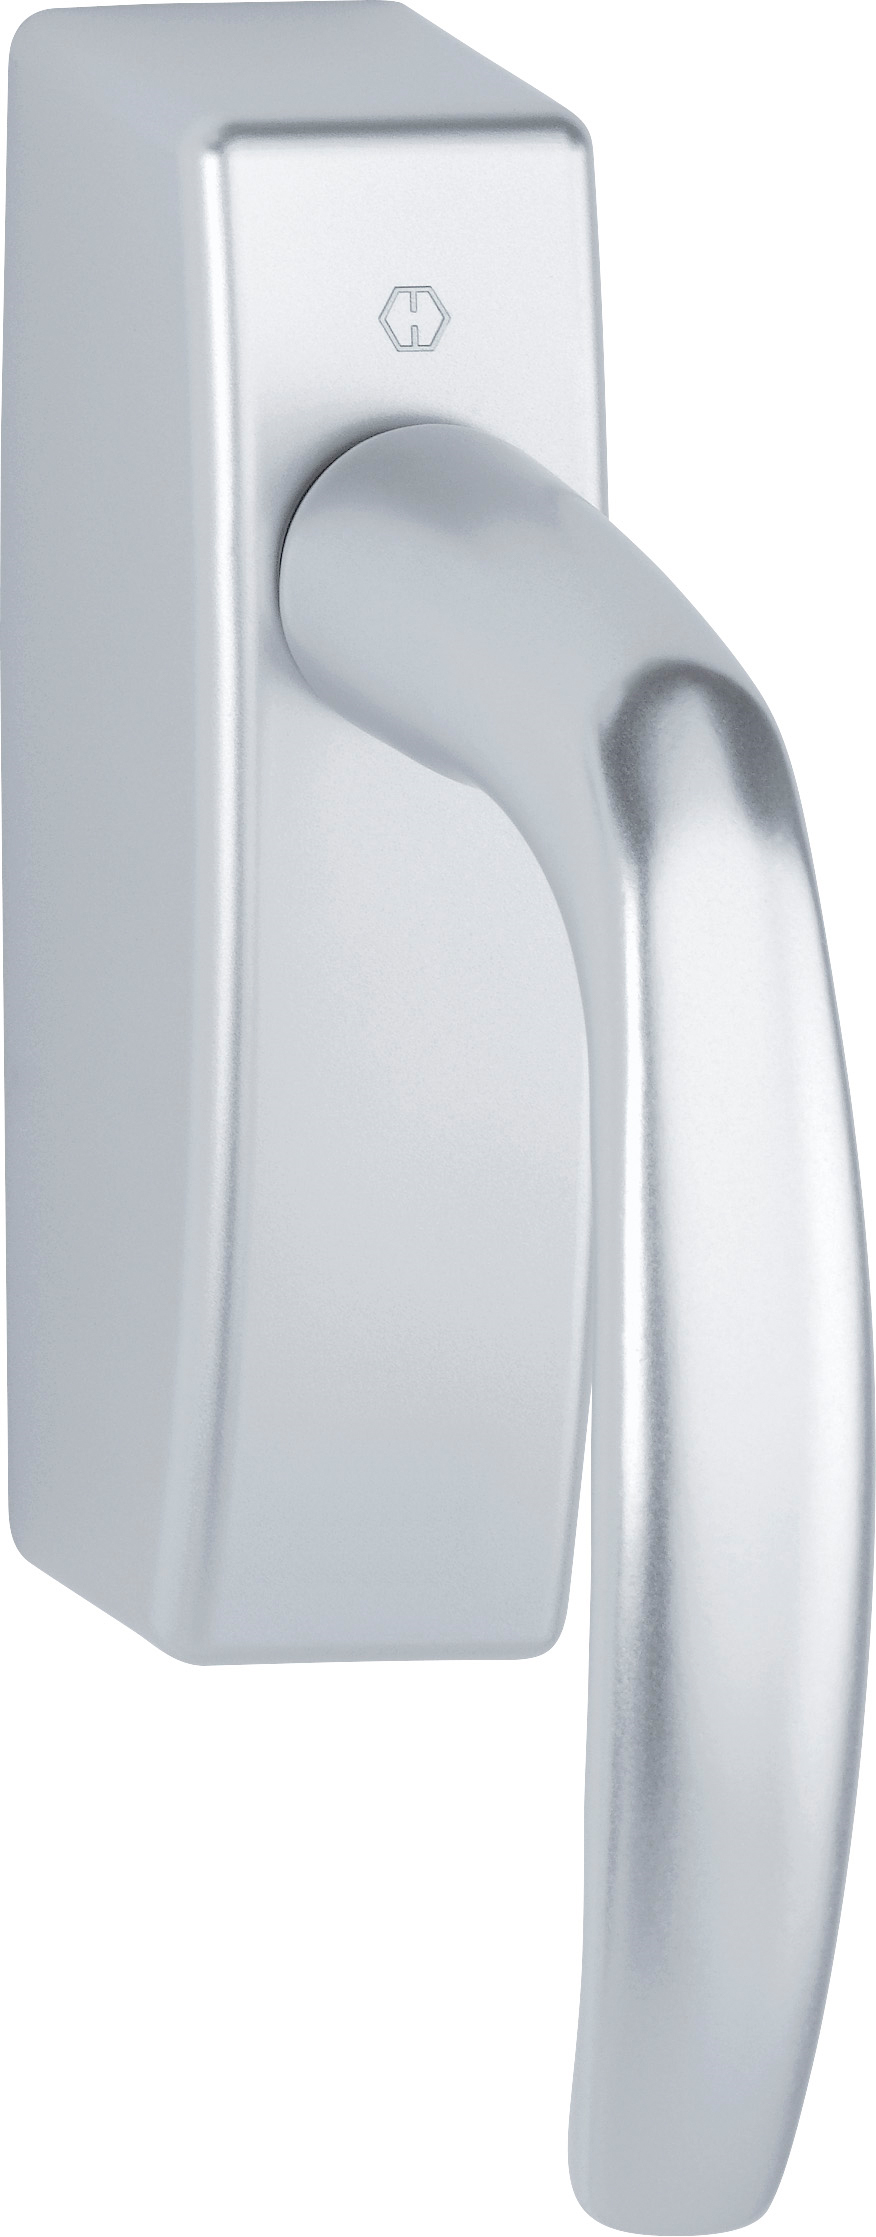 OPUS eWindow handgreep Atlanta aluminium zilver, 32 mm pin, bidirectioneel